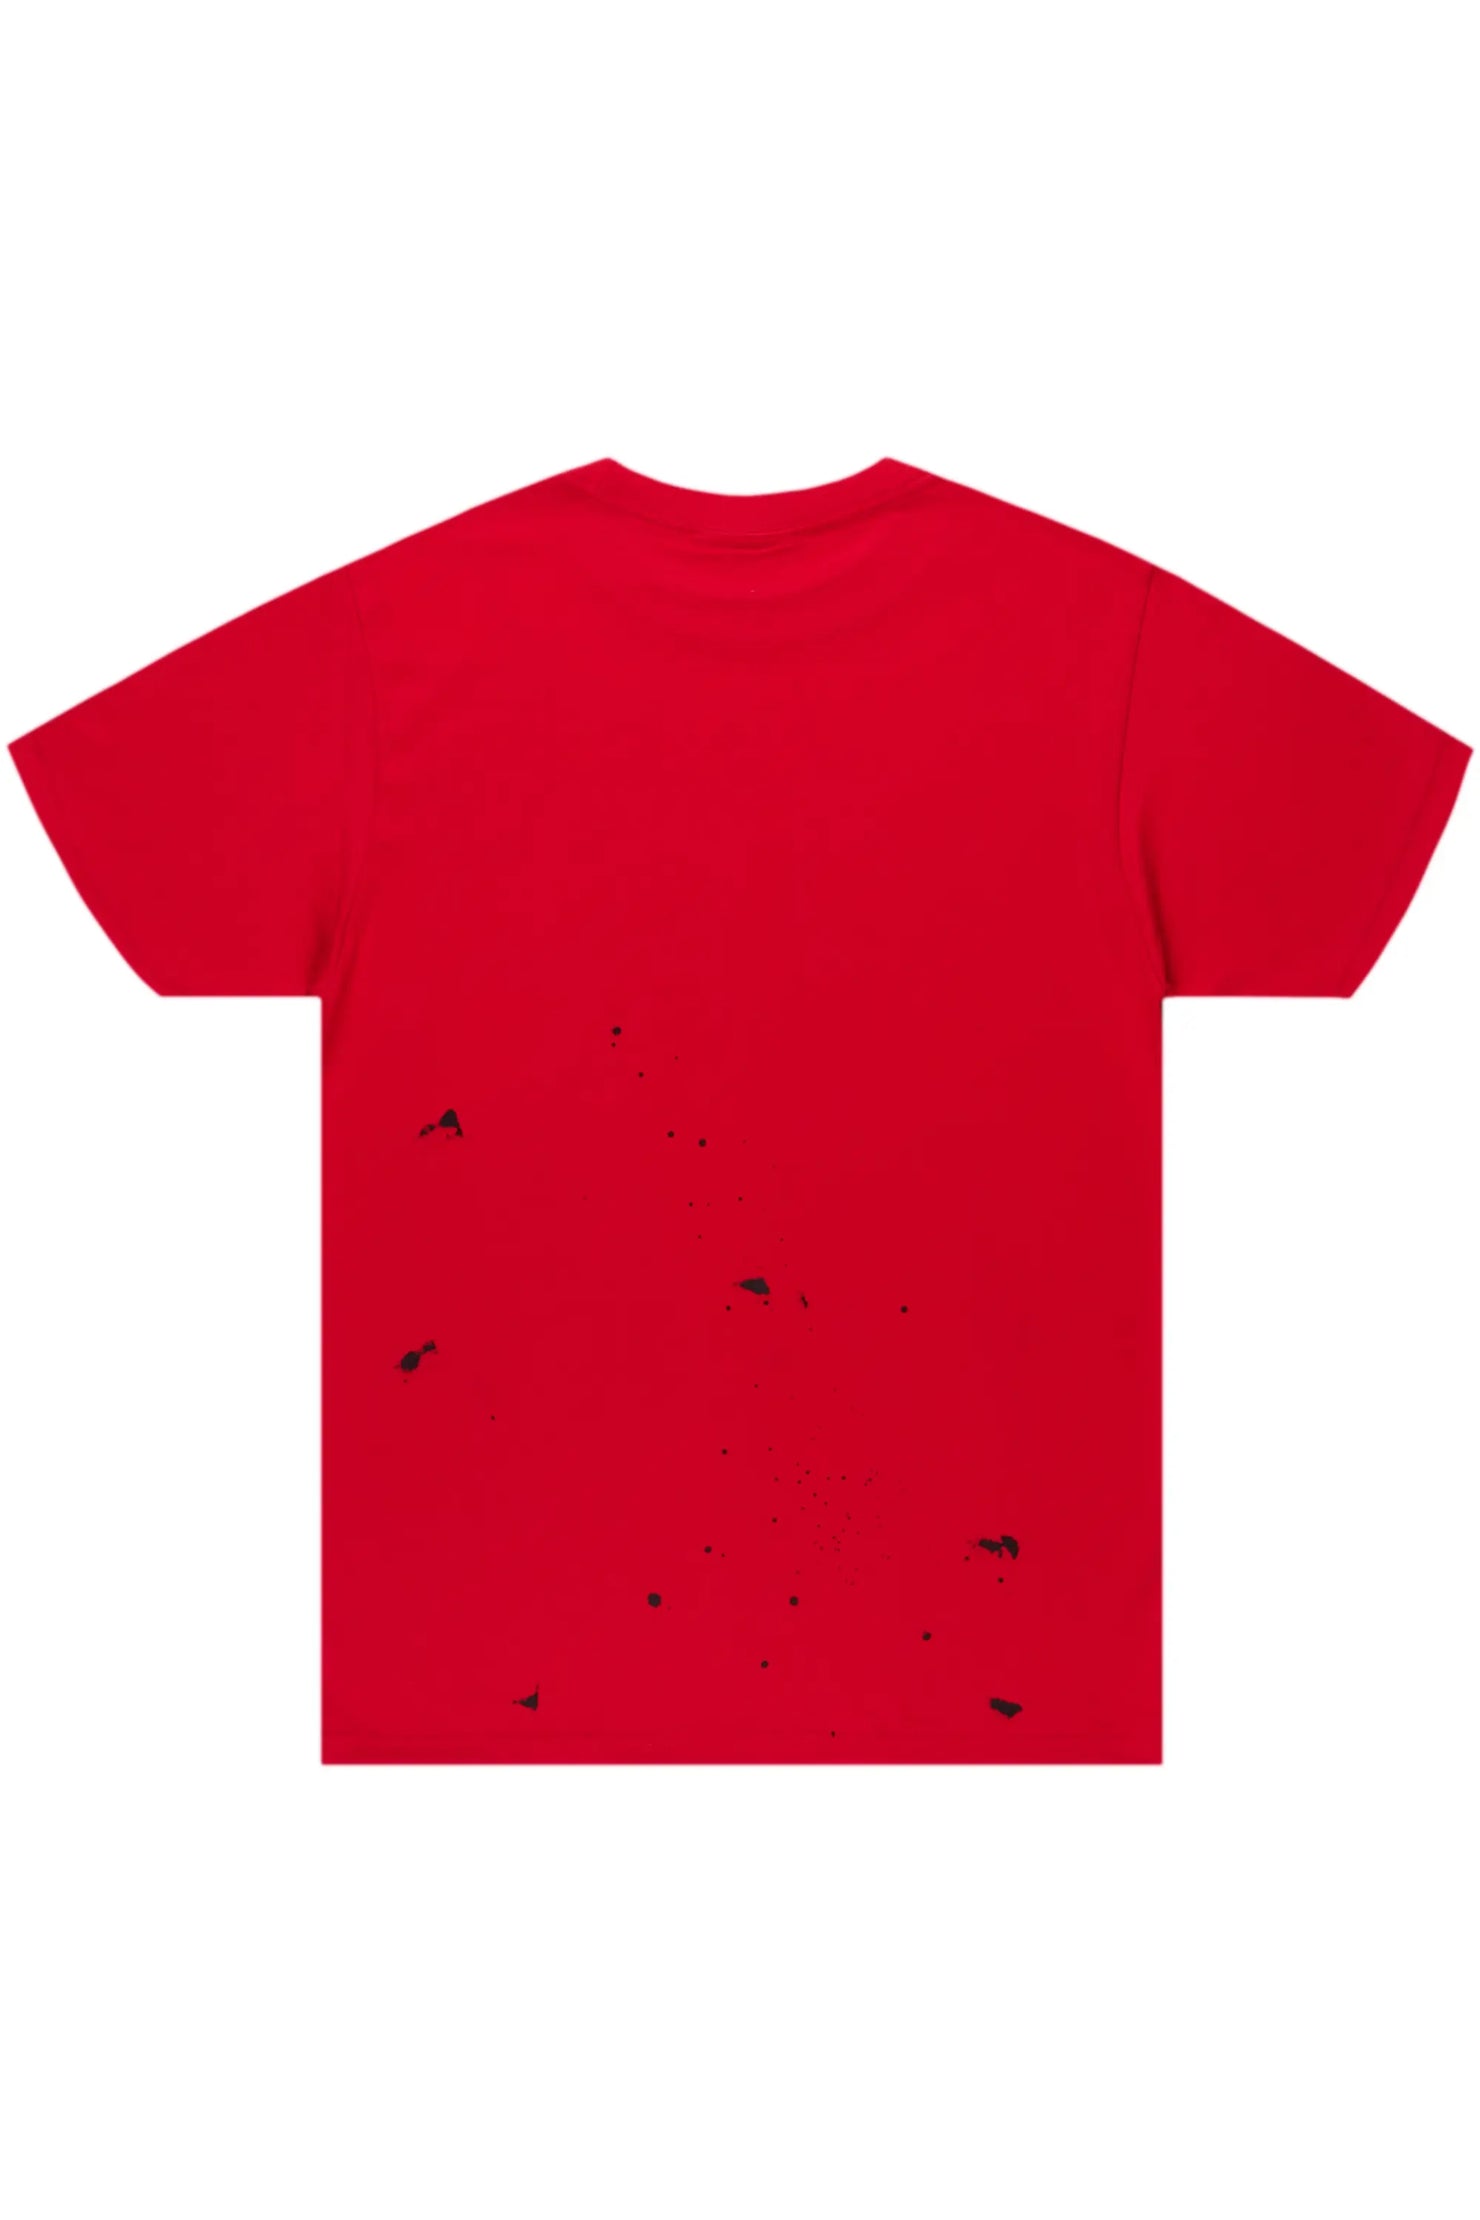 Raffer Red Graphic T-Shirt